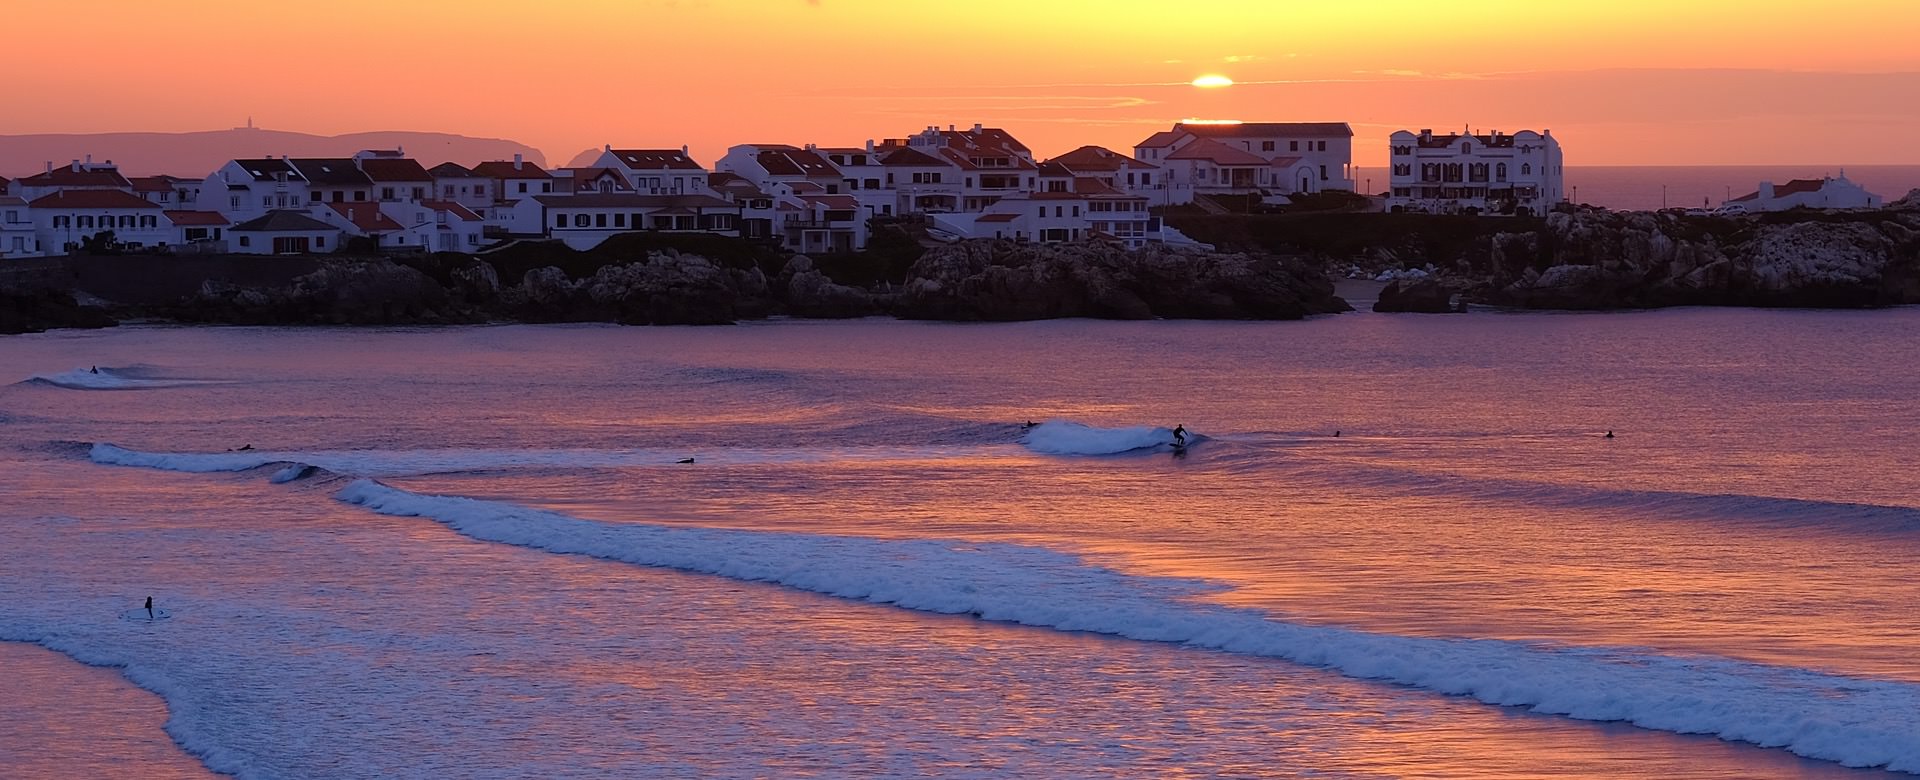 Sunset Surf v Baleal, Peniche